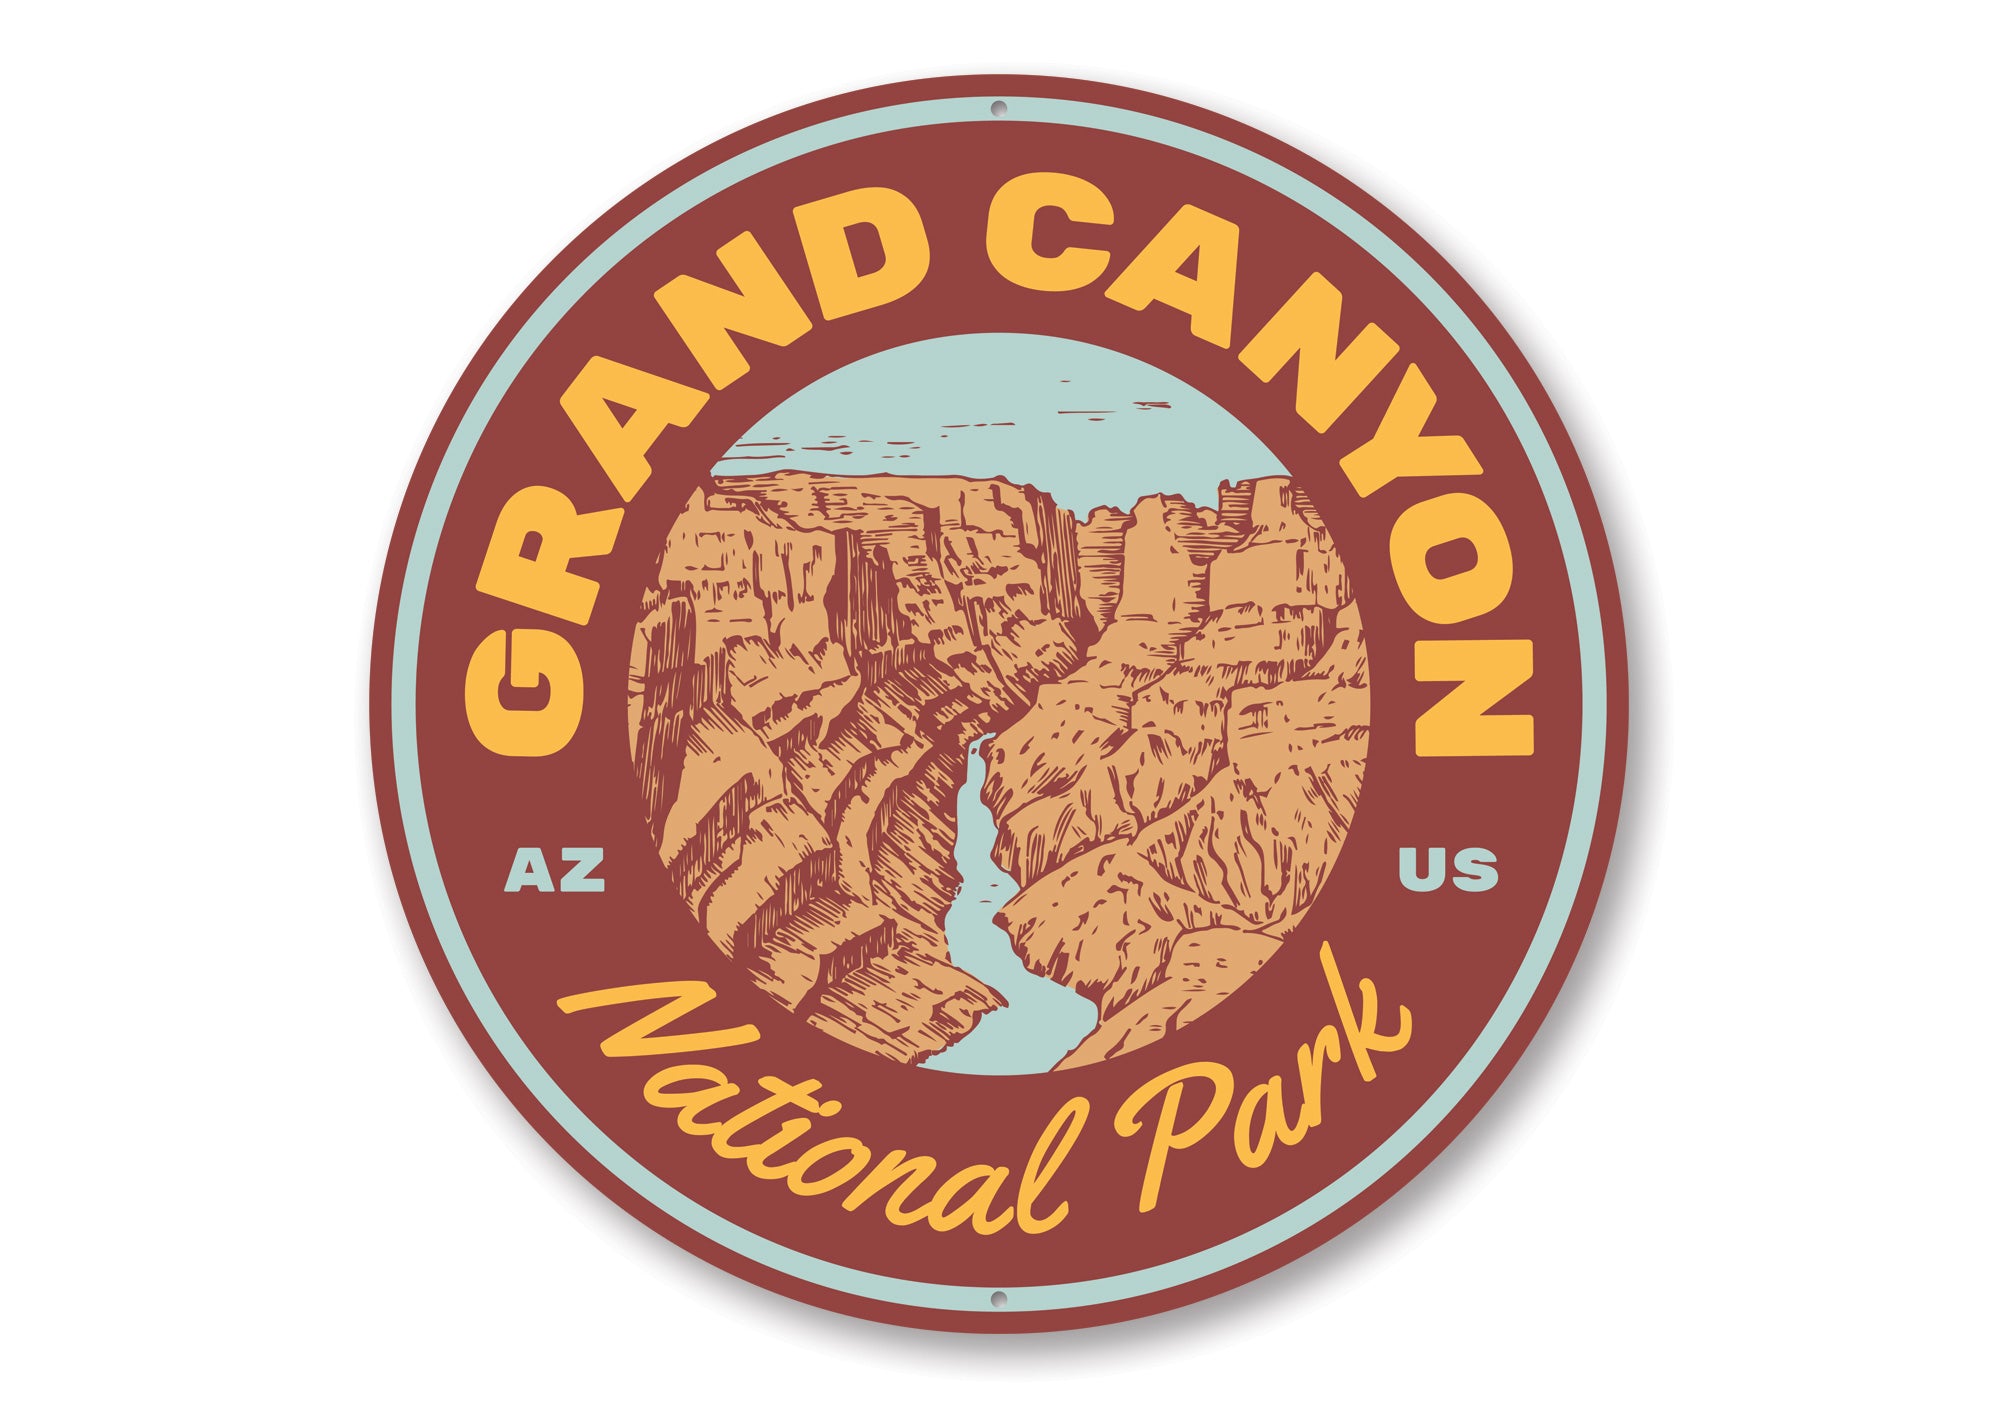 Grand Canyon Sign